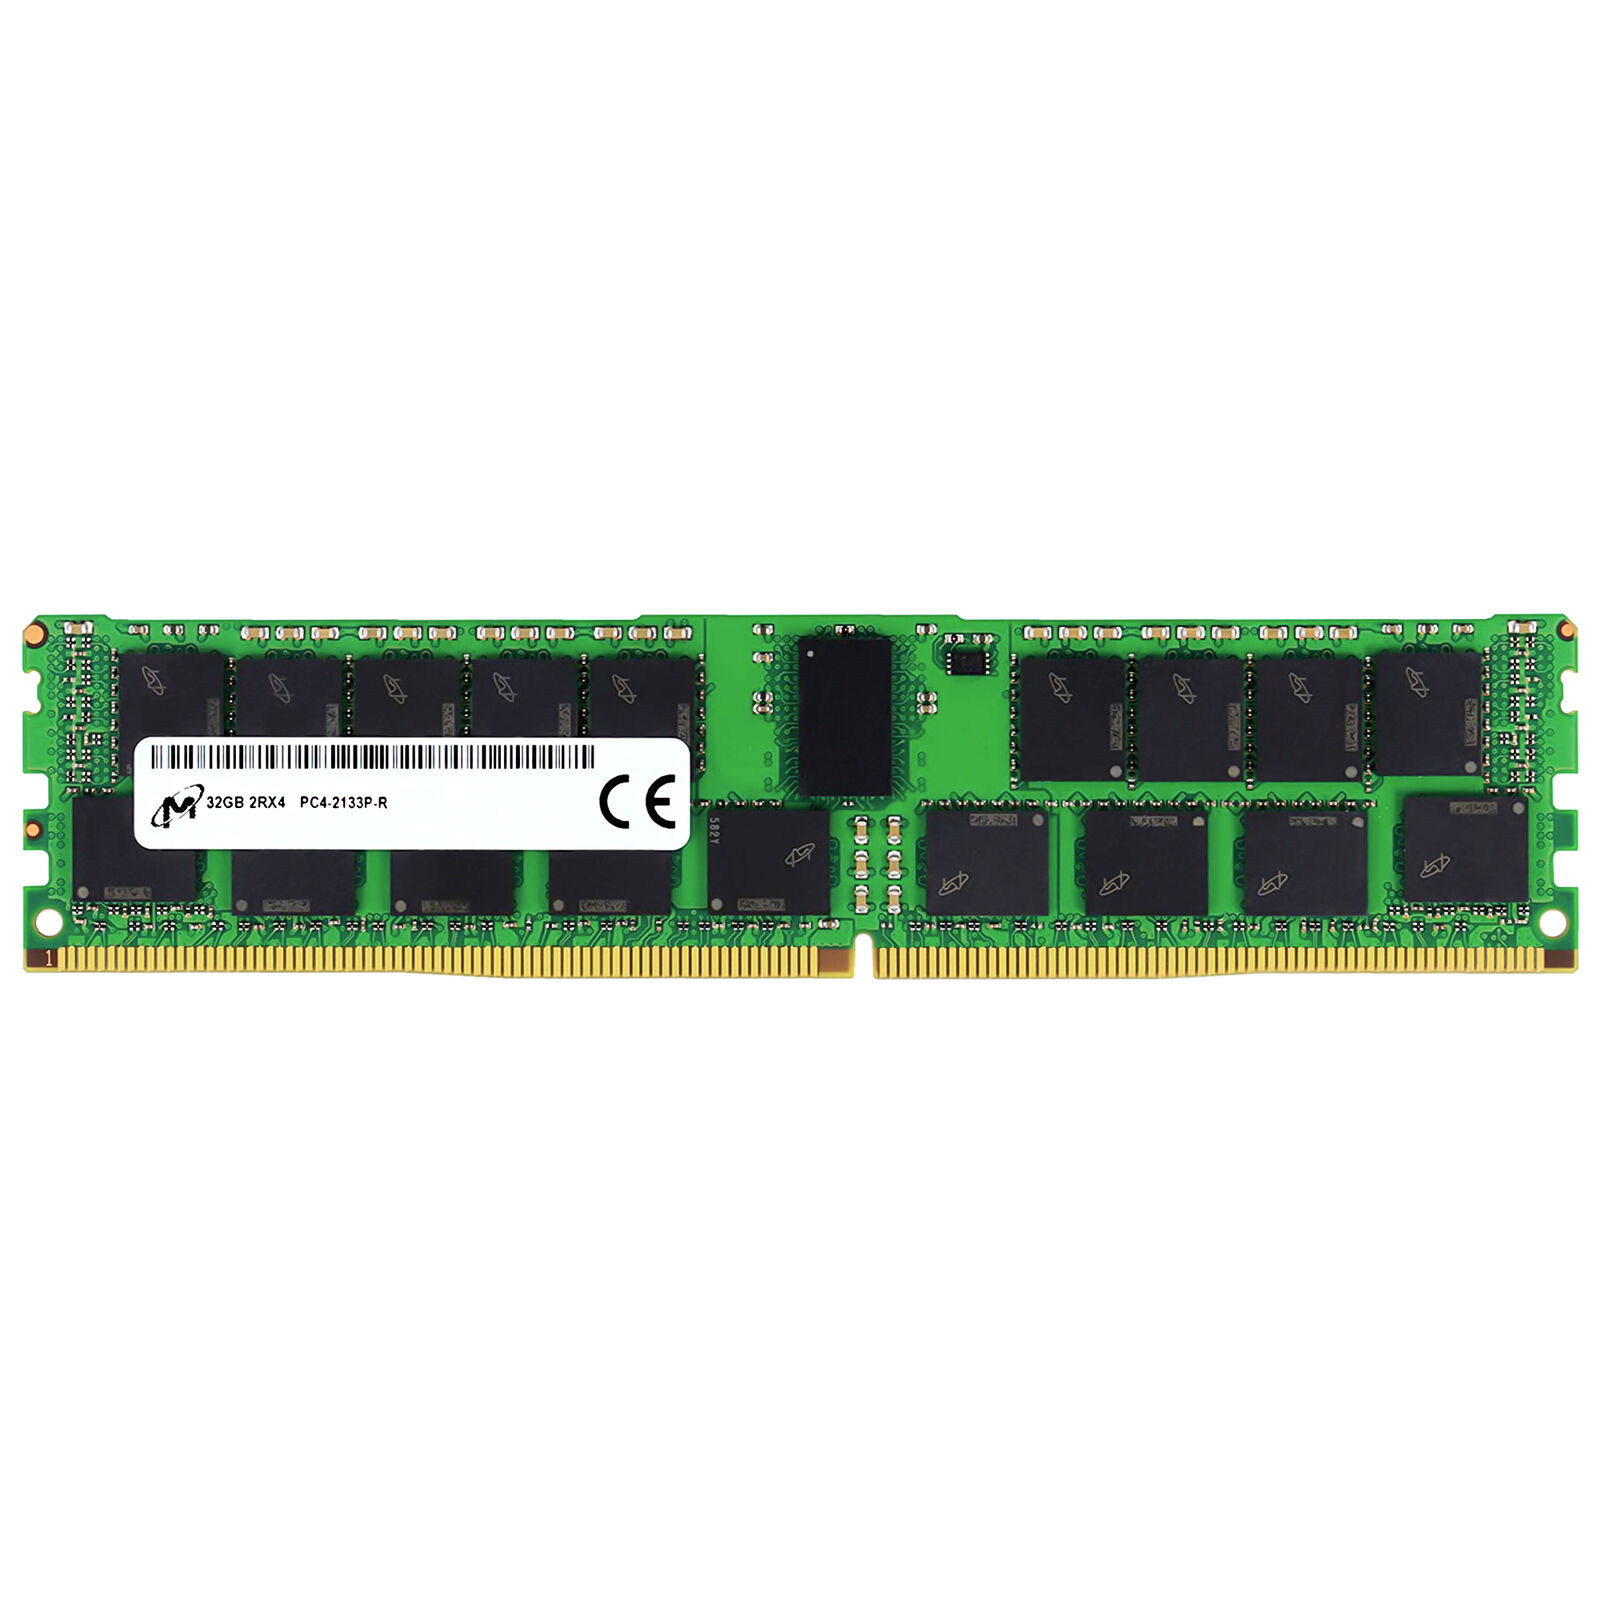 Micron 32GB 2Rx4 PC4-2133P RDIMM DDR4-17000 ECC REG Registered Server Memory RAM